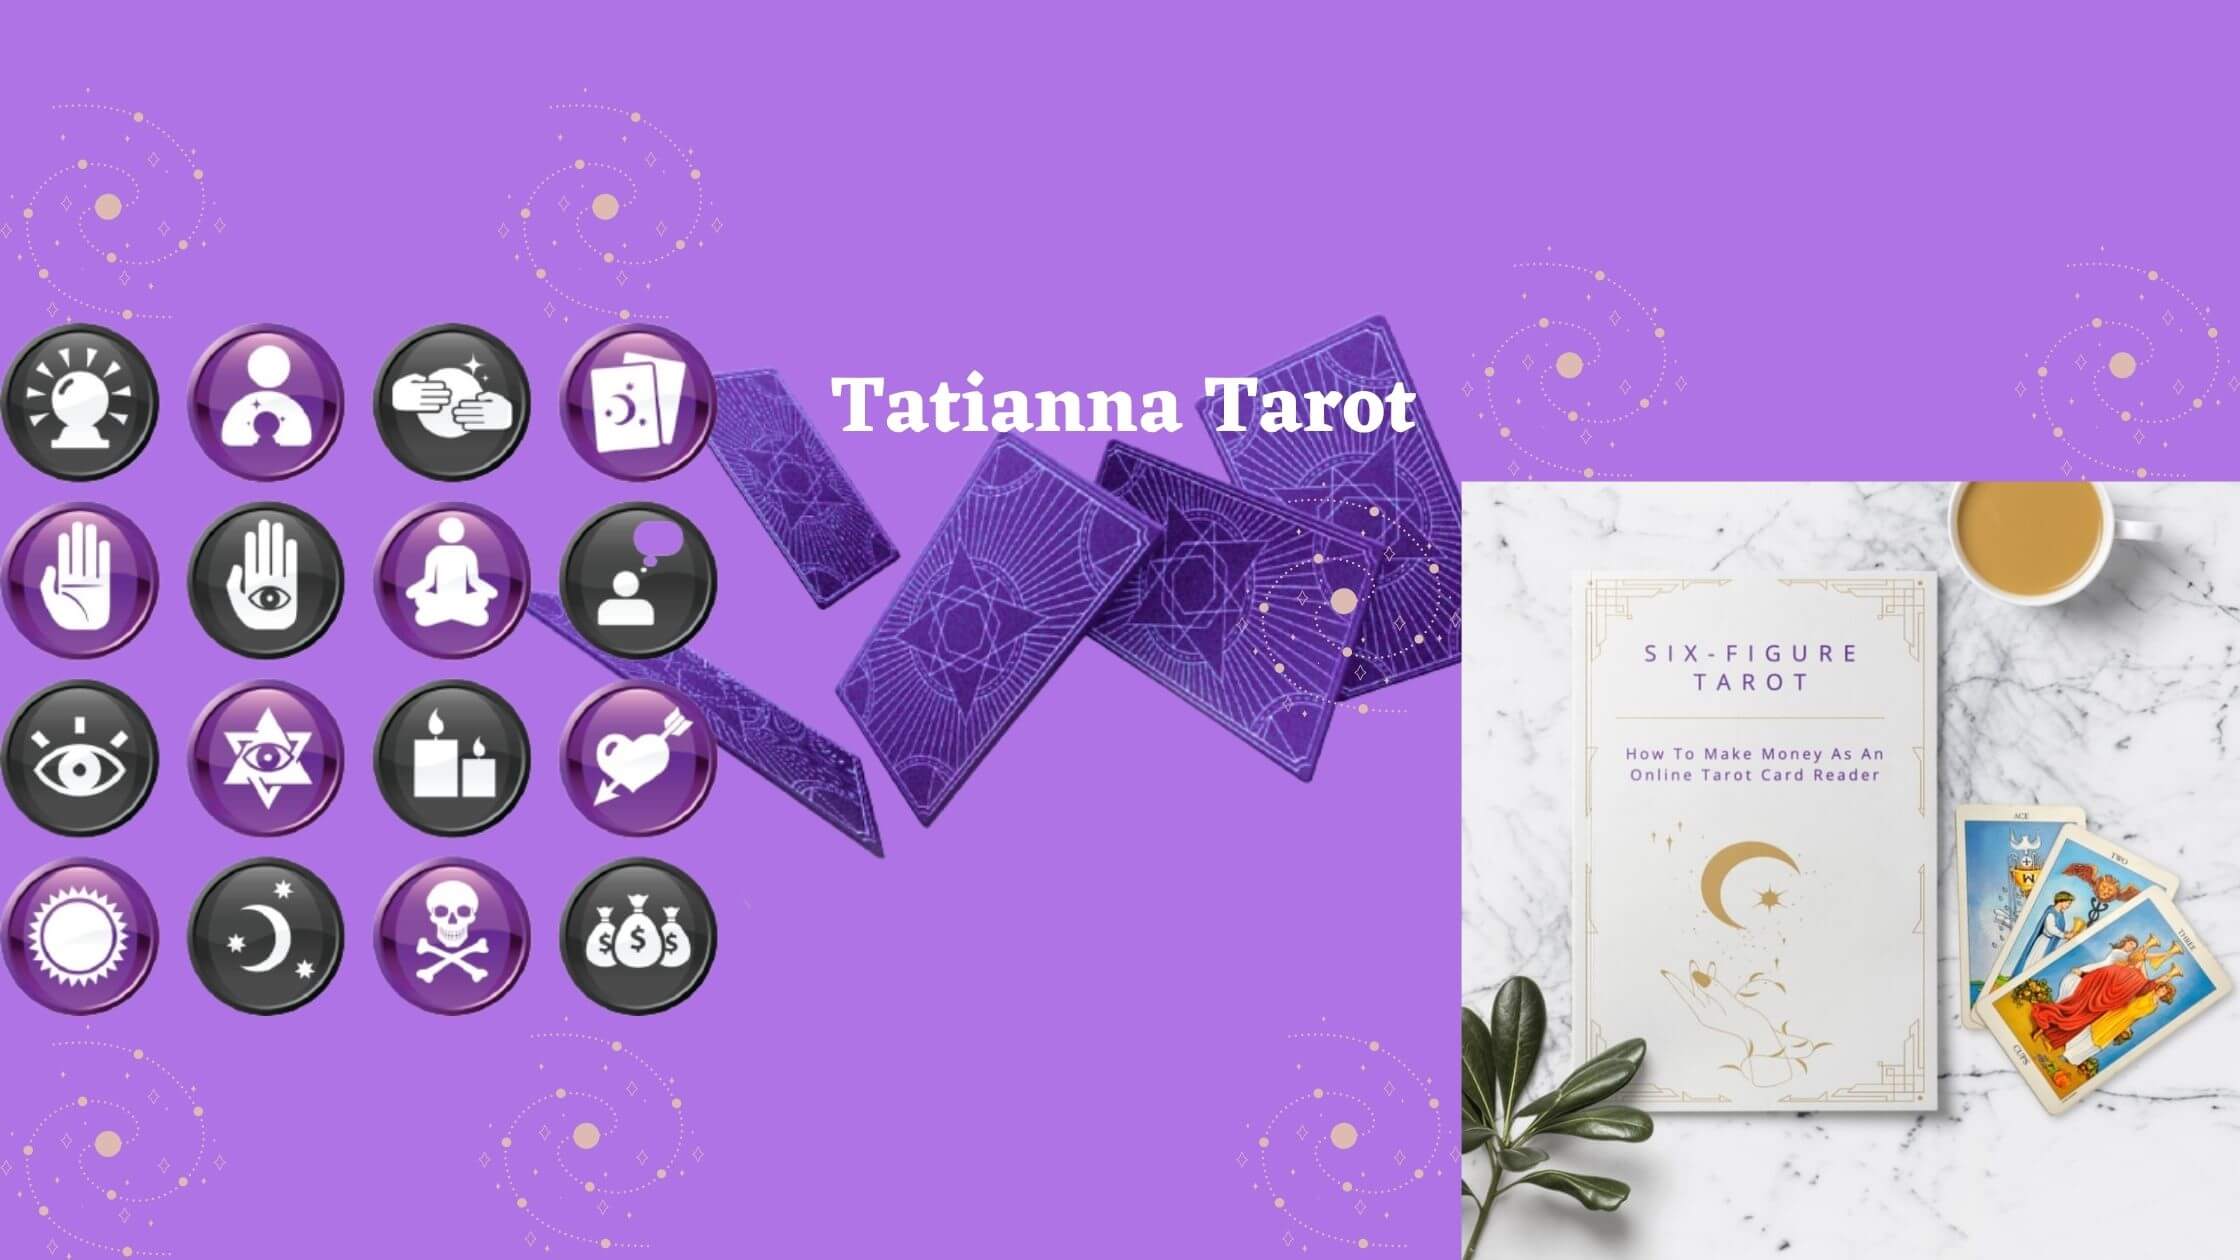 Tatianna Tarot Reading Course Benefits